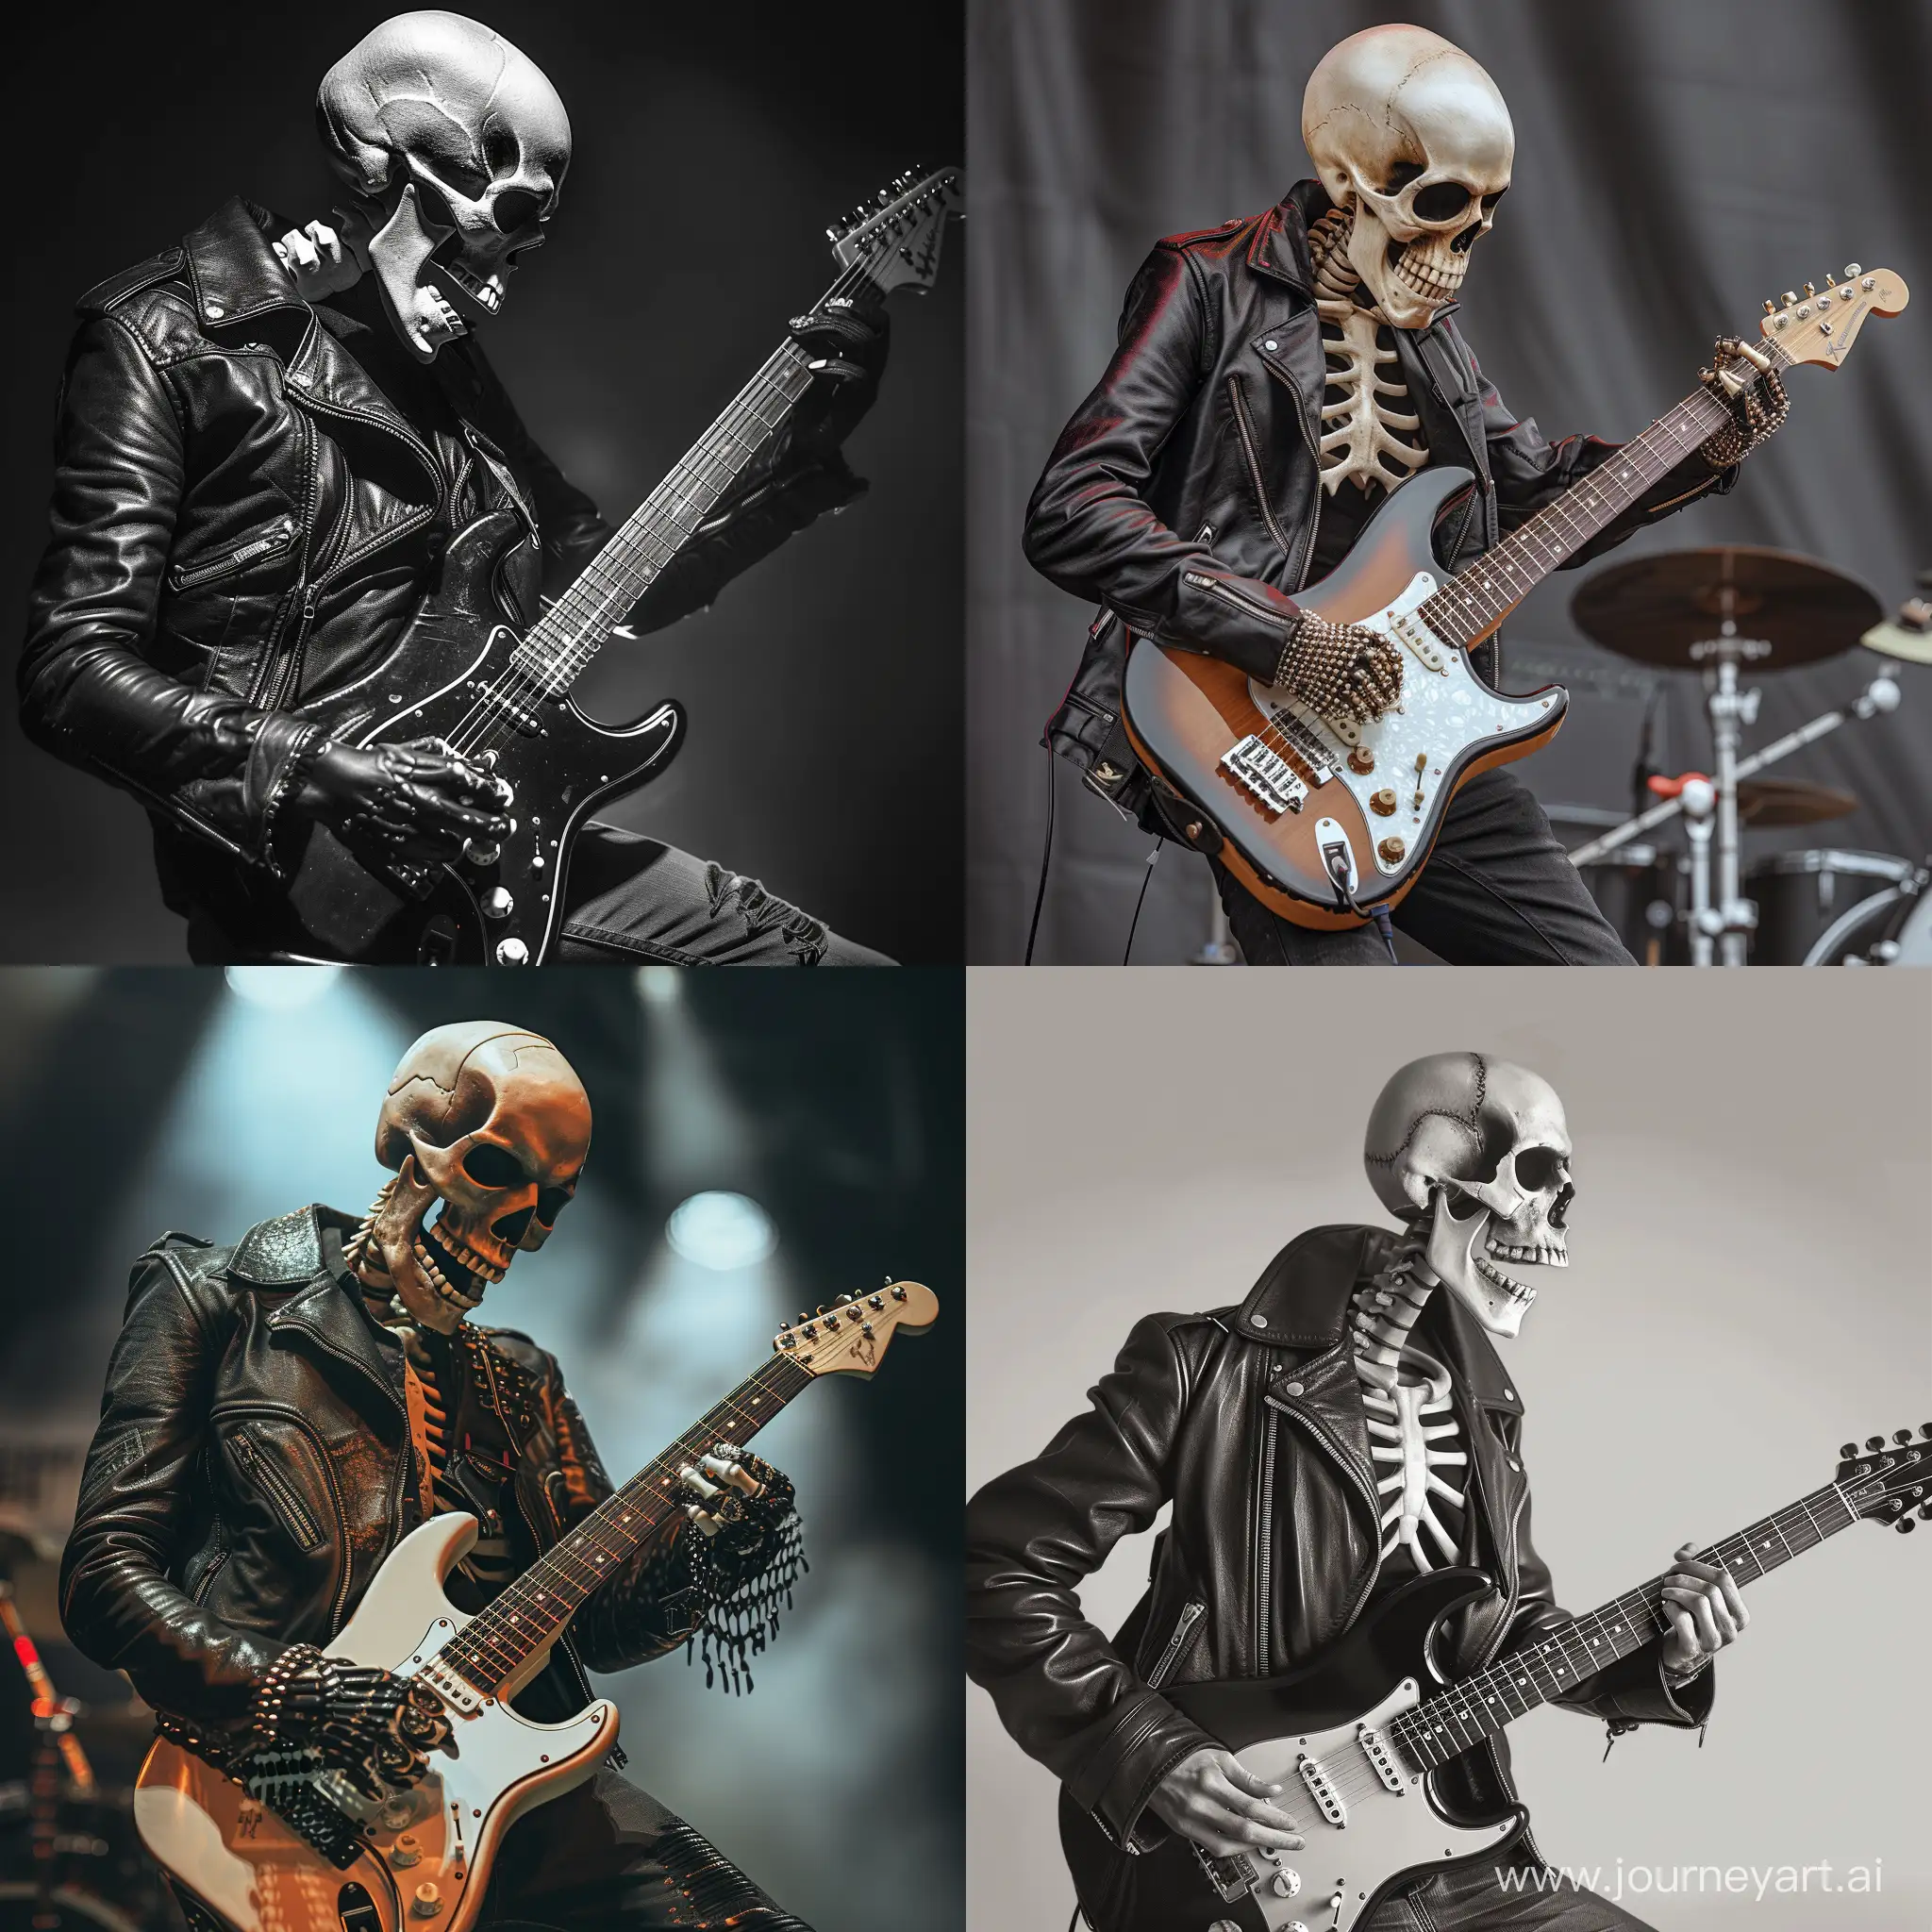 Rockstar-Skeleton-Jamming-on-Electric-Guitar-at-Vibrant-Music-Festival